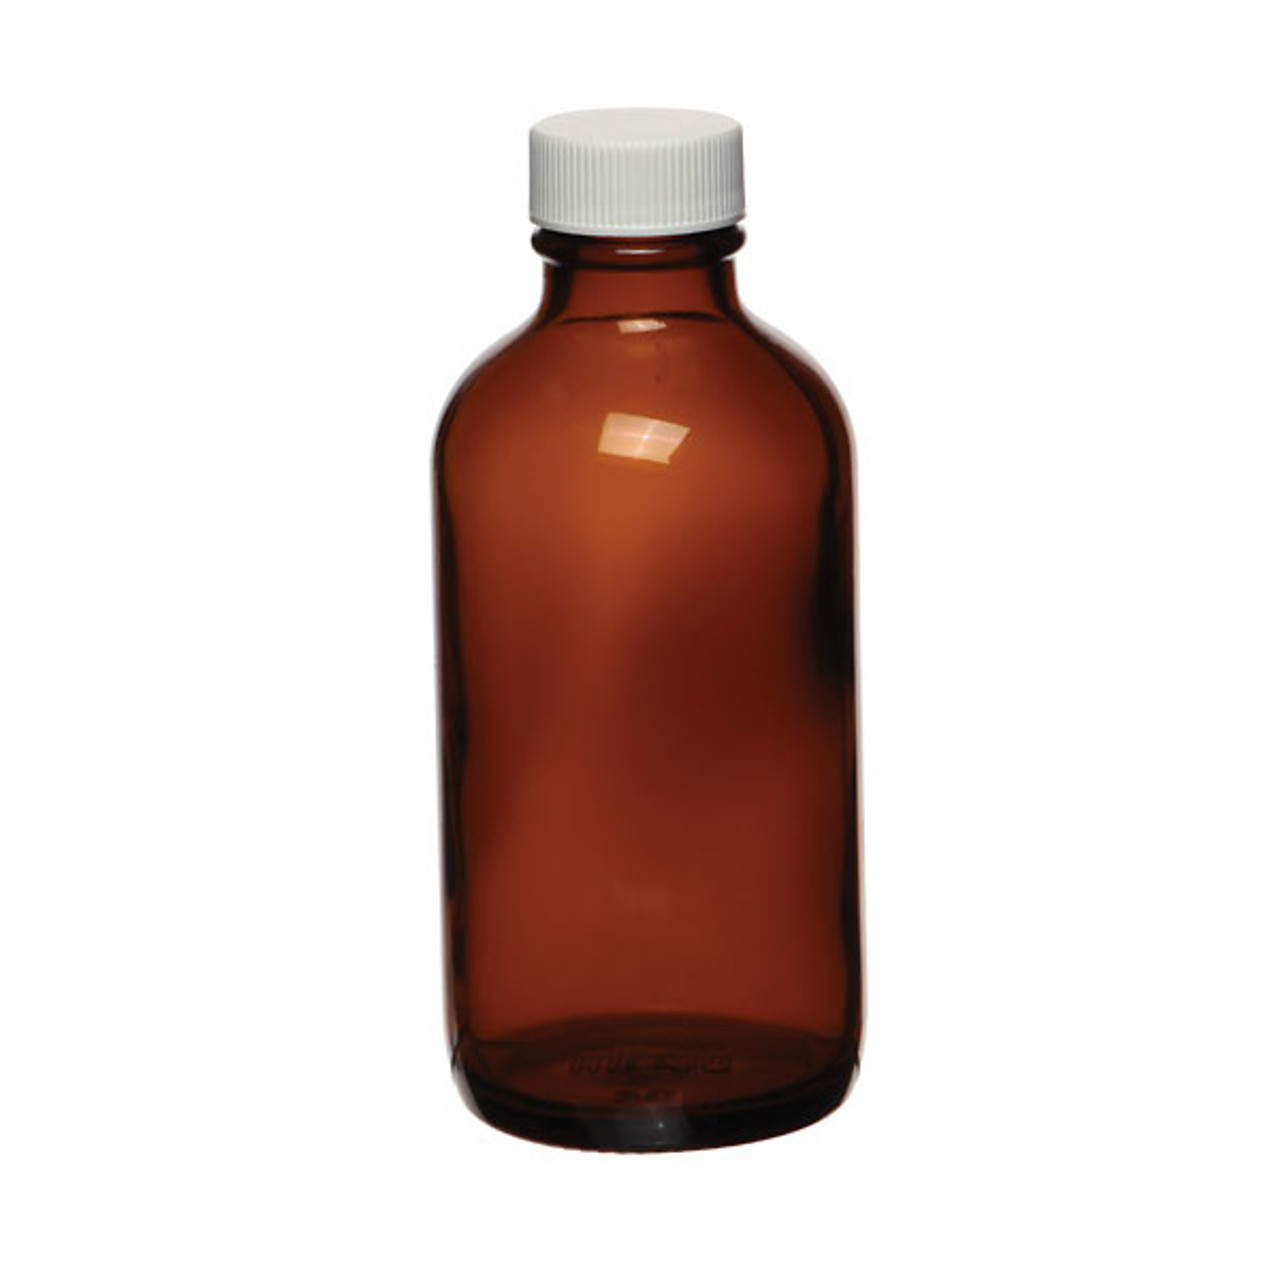 Amber Boston Round Glass Bottles - 8 oz